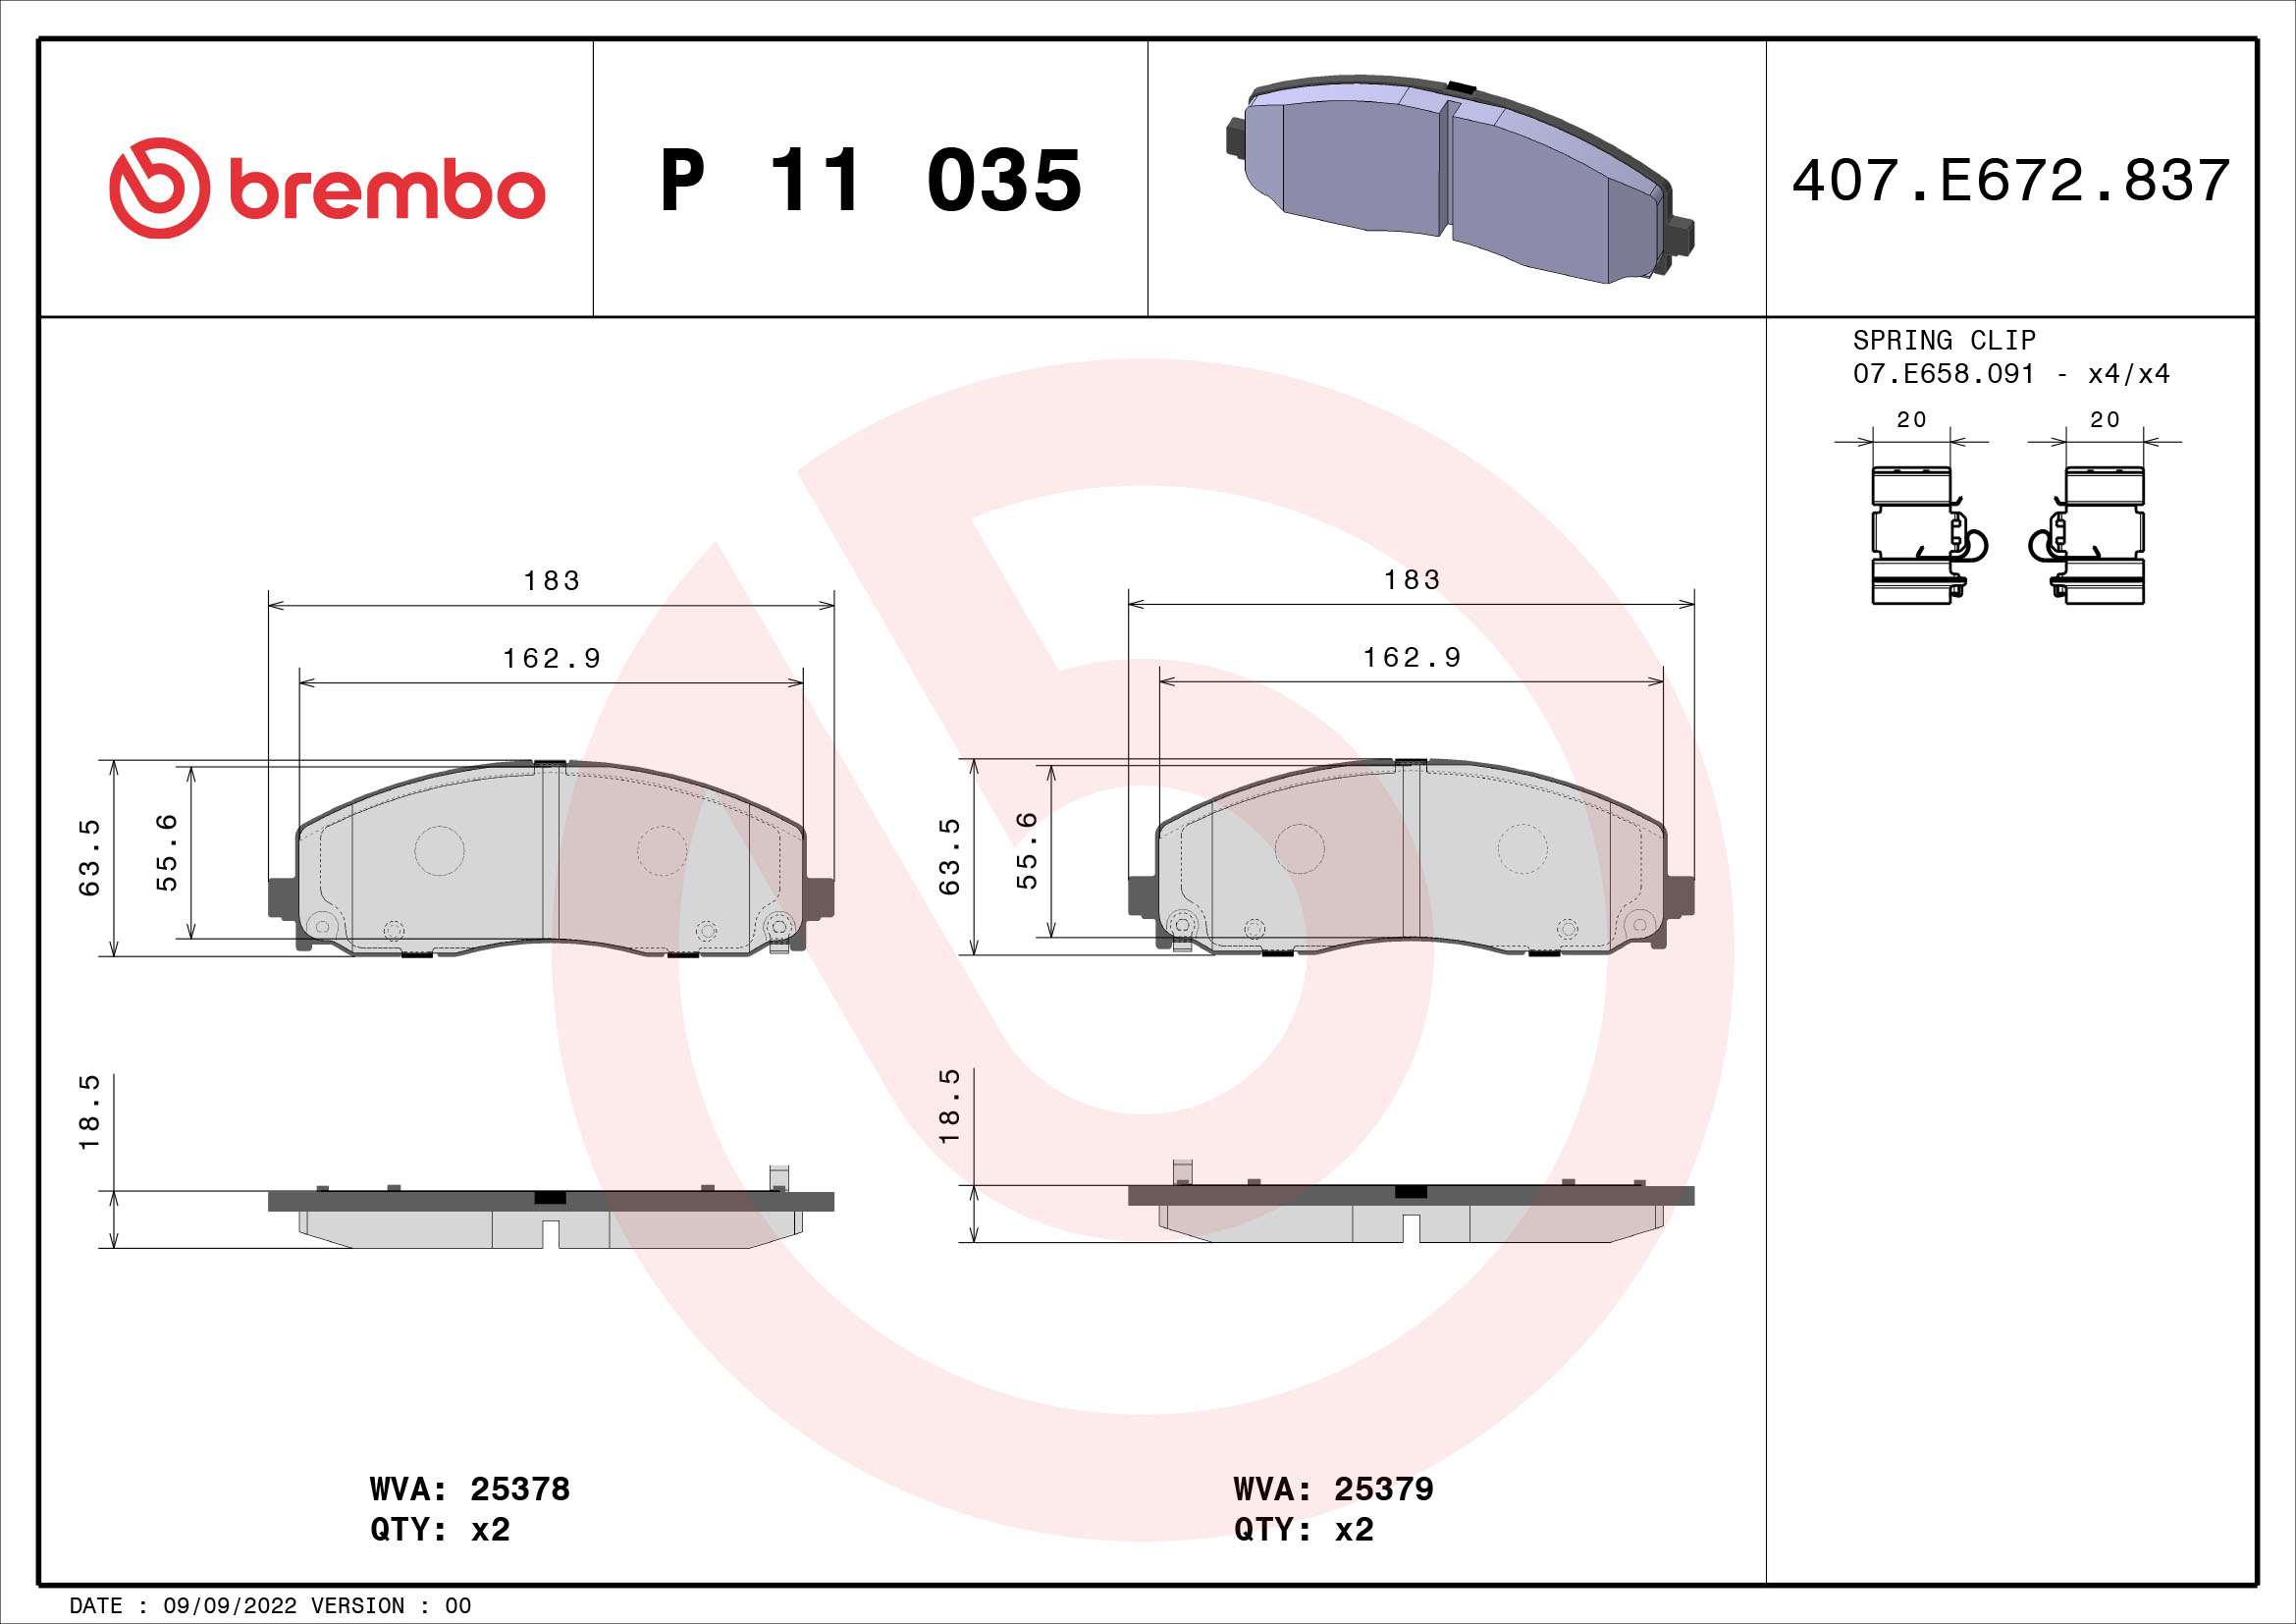 Brembo Remblokset P 11 035